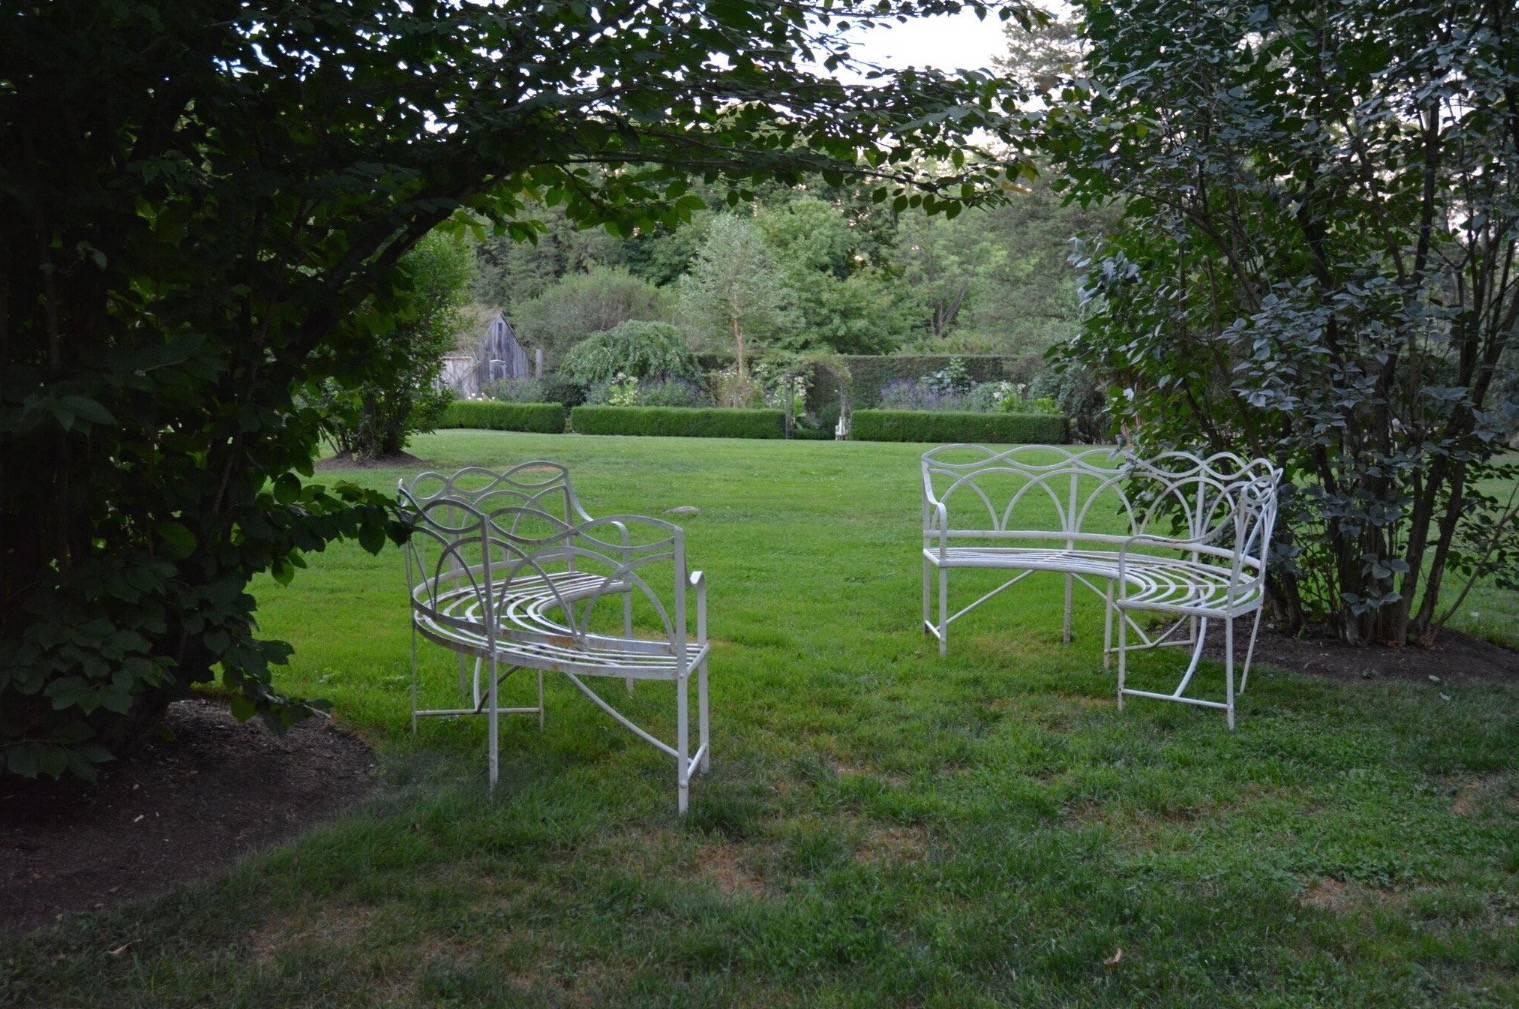 Garden Benches from Regency, England 1